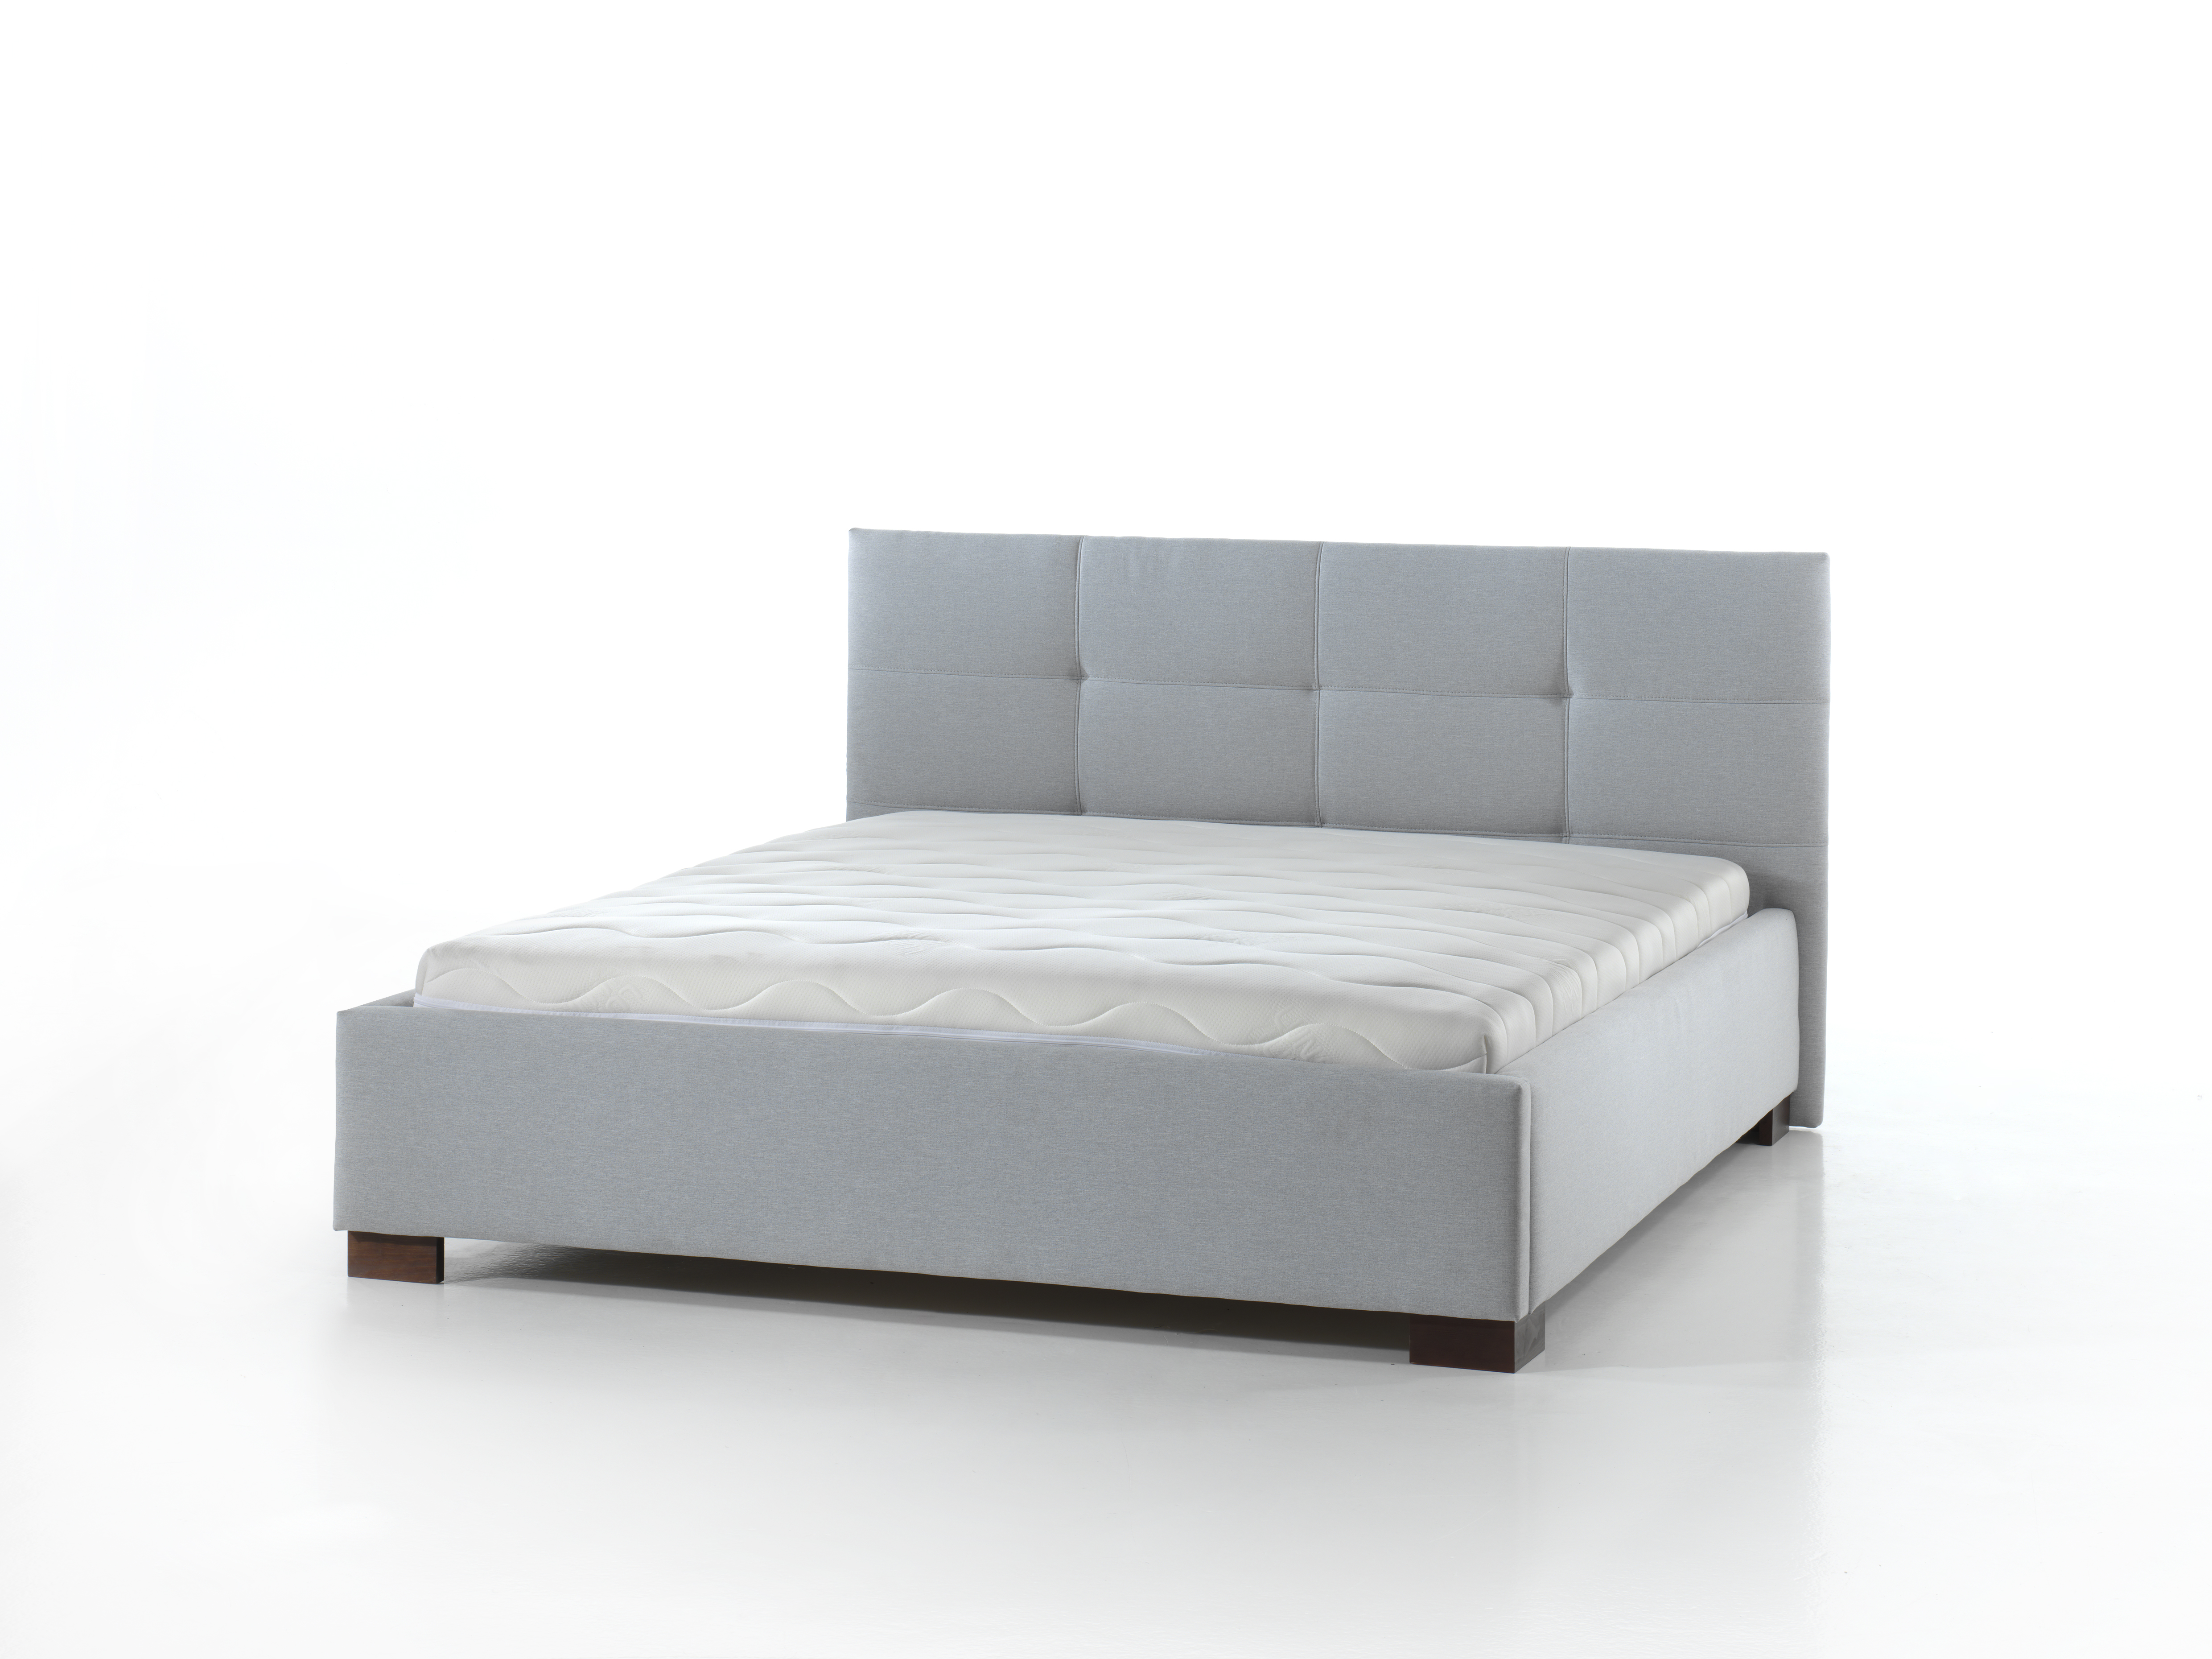 Bed 160 x 200cm